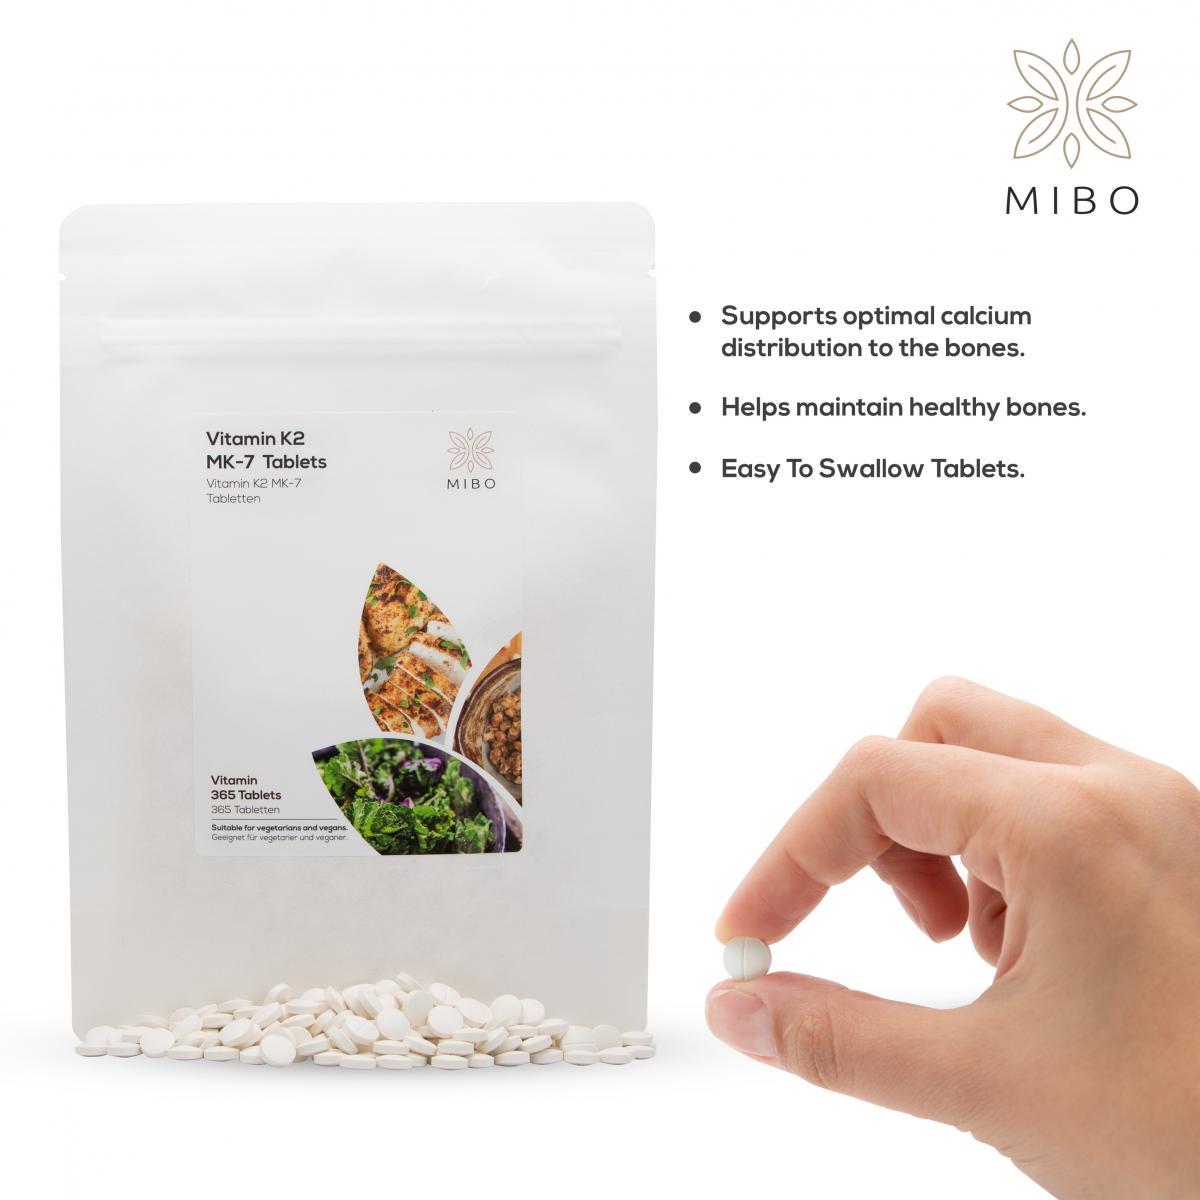 Vitamin K2 MK7 + Magnesium + Vitamin B12 Methylcobalamin Tablets pack of 3 by Mibo